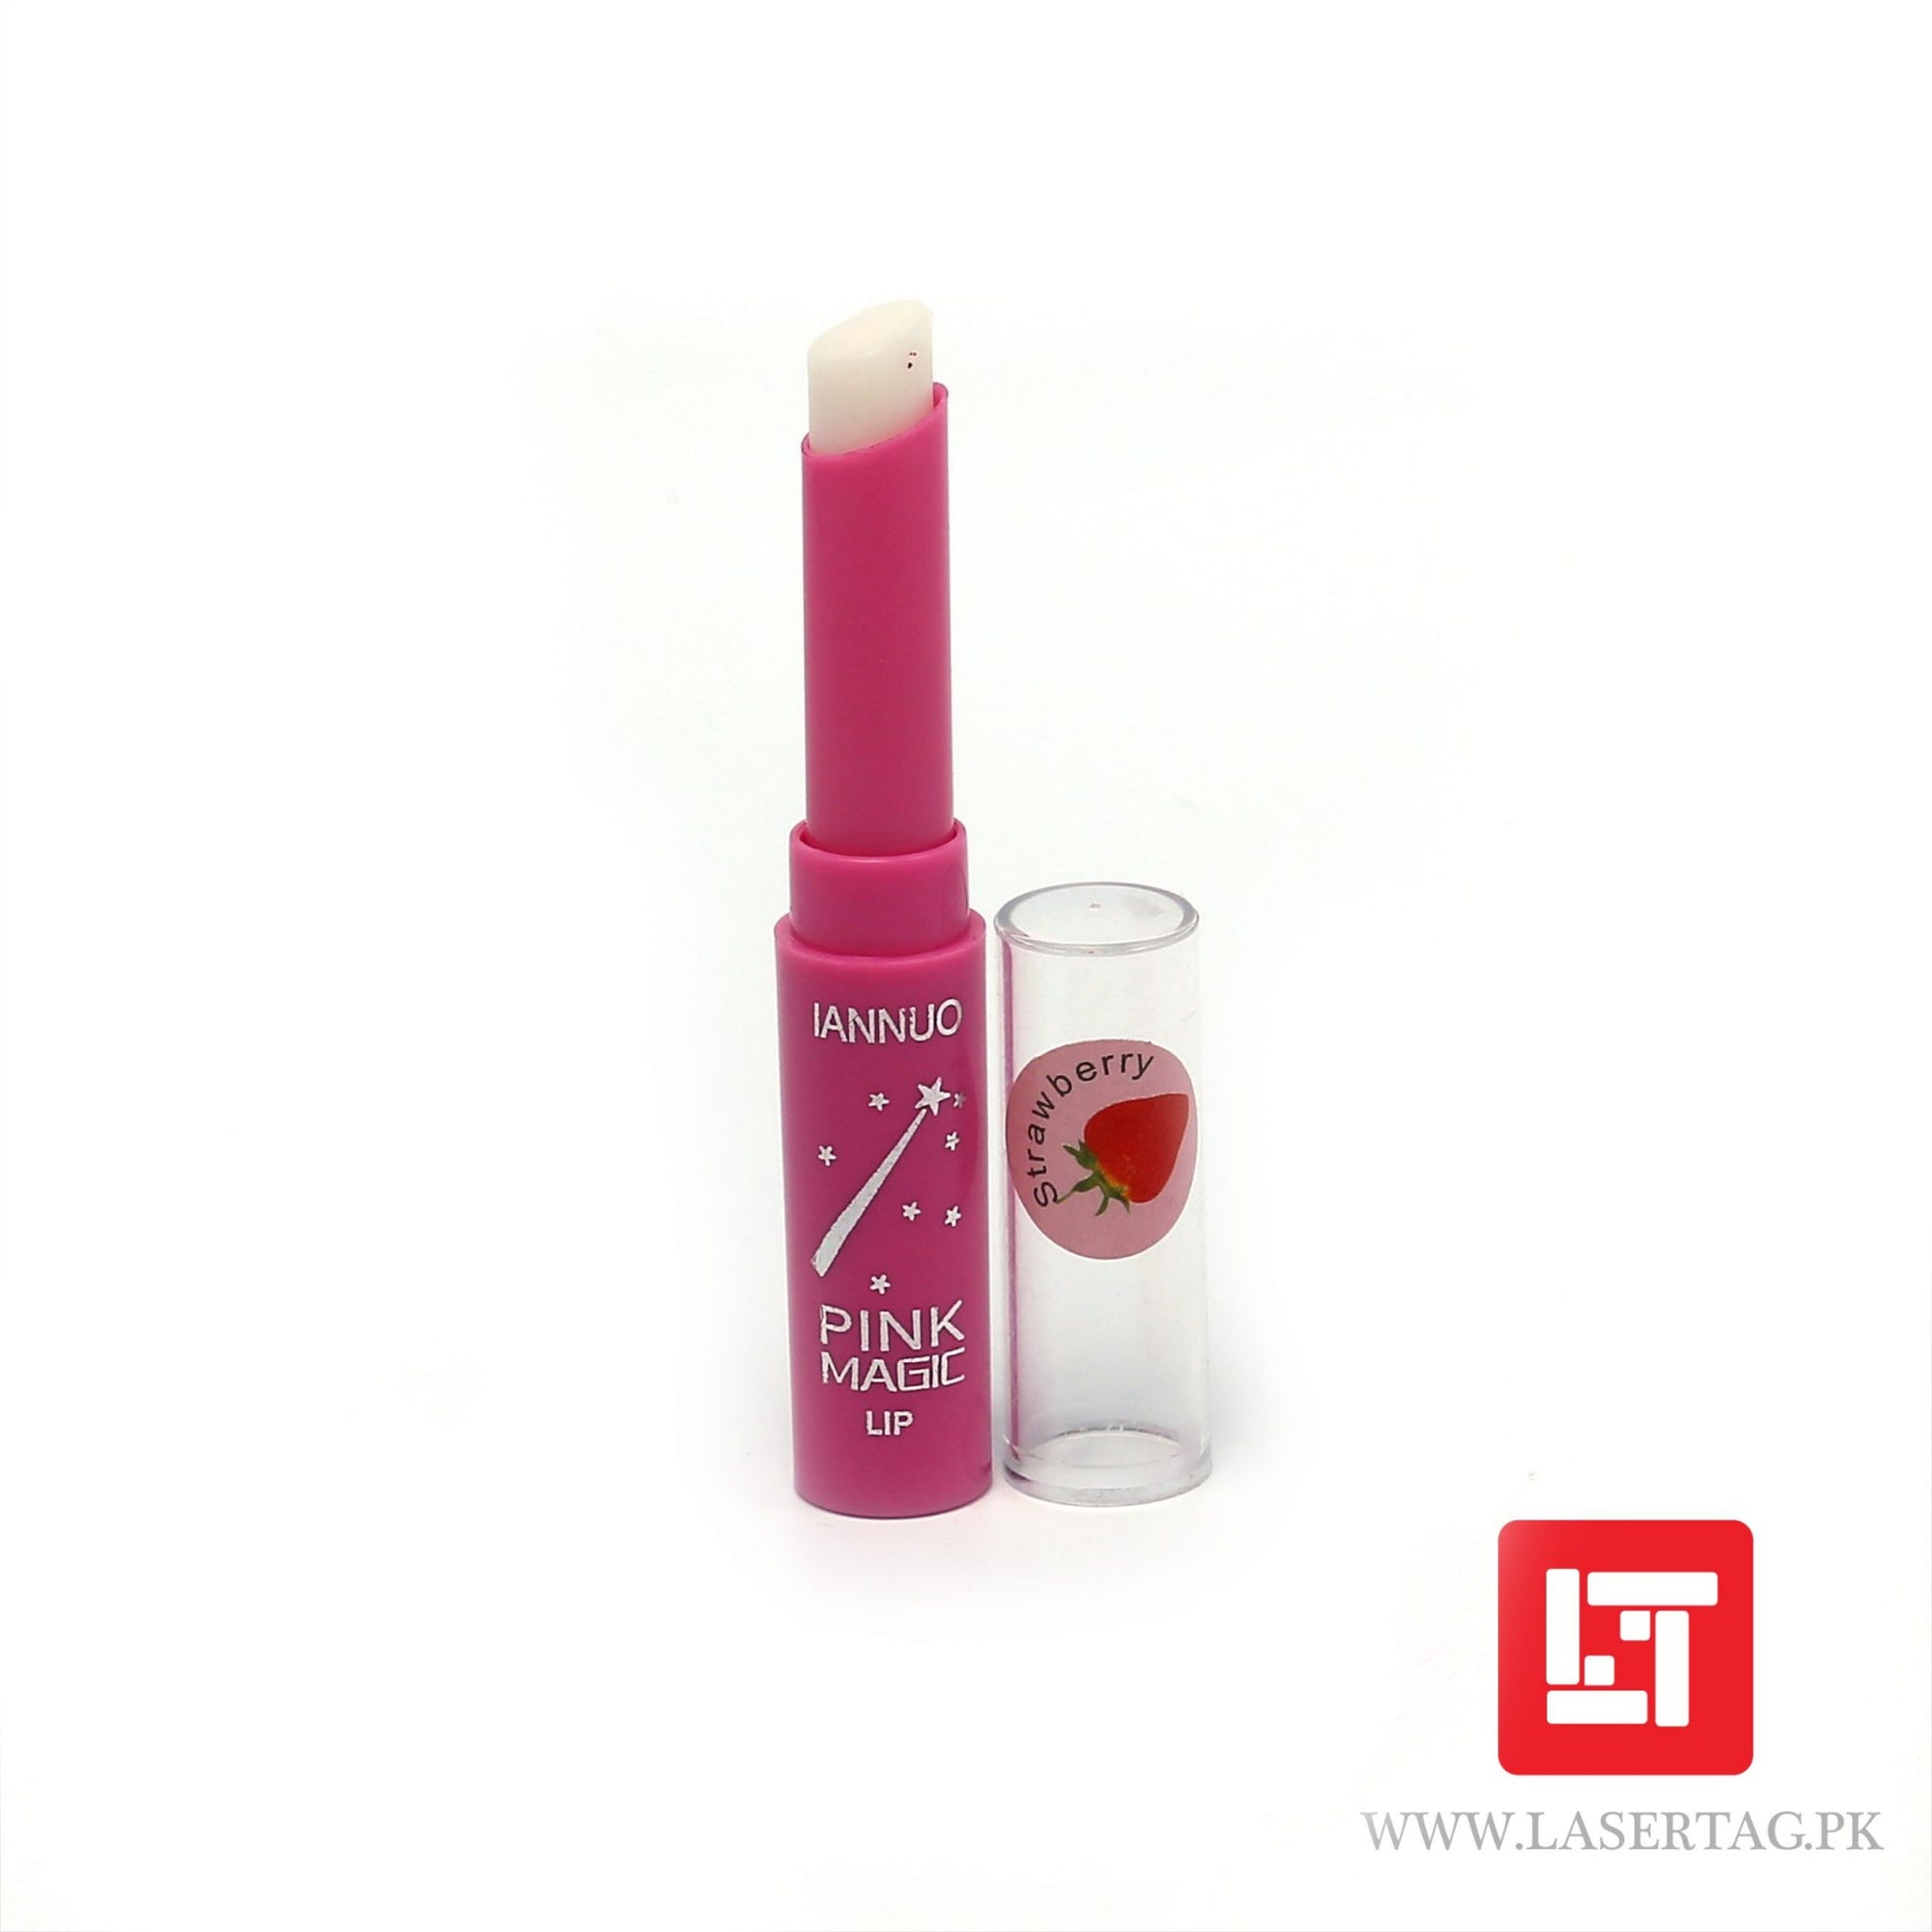 Pink Magic Fruit Juice Vitamin C Changeable Color Lipstick freeshipping - lasertag.pk